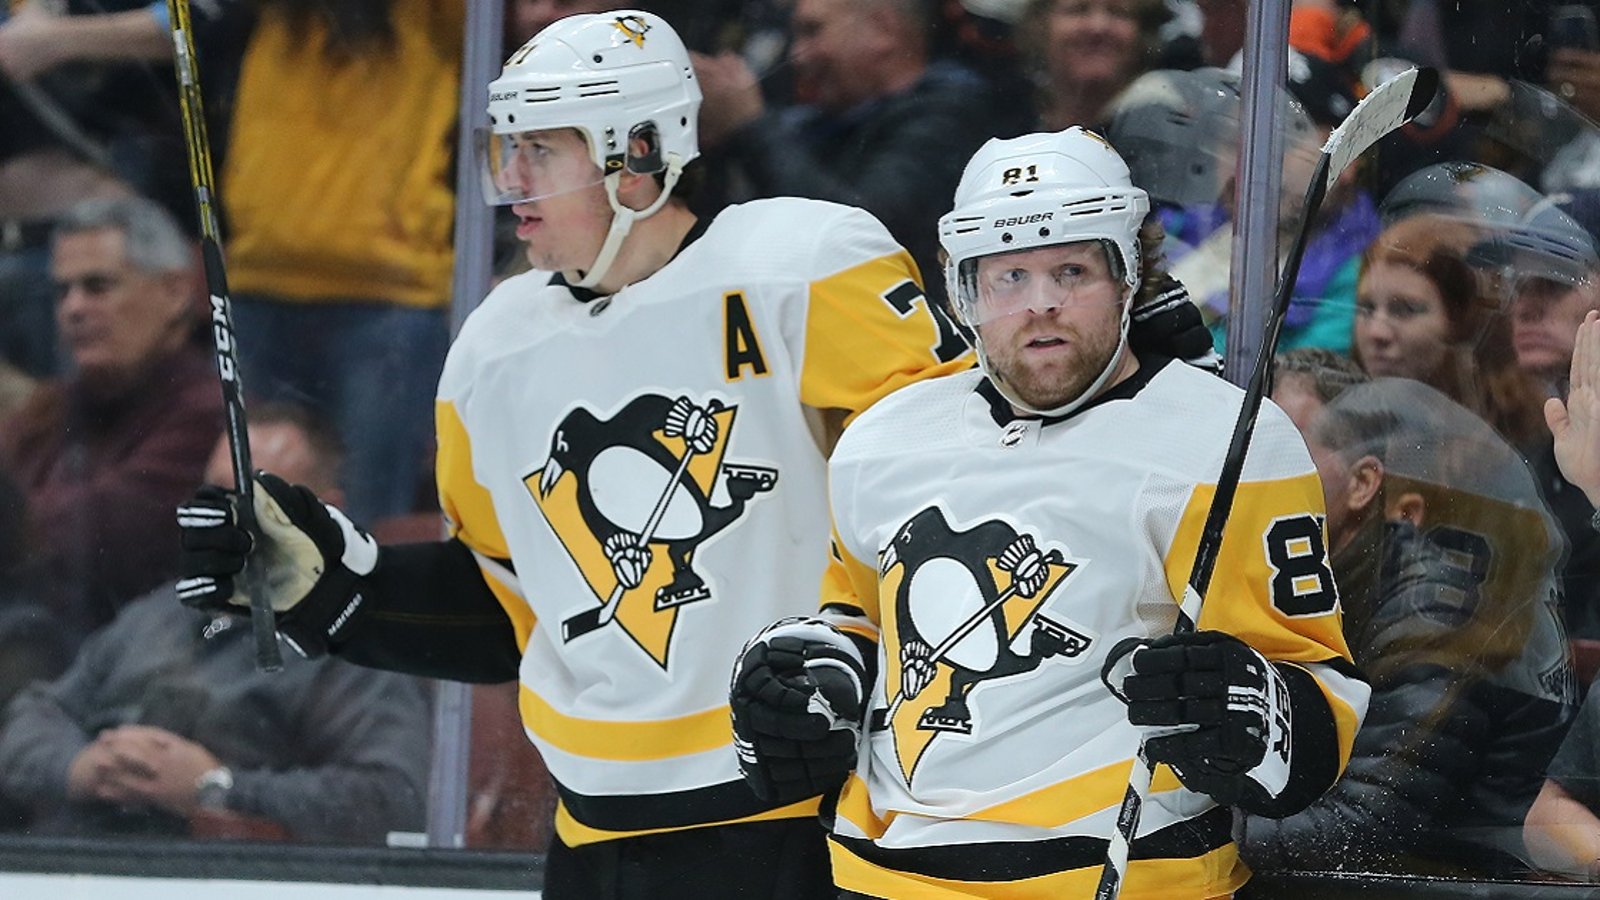 Blockbuster trade rumors involving some of the Penguins top stars.